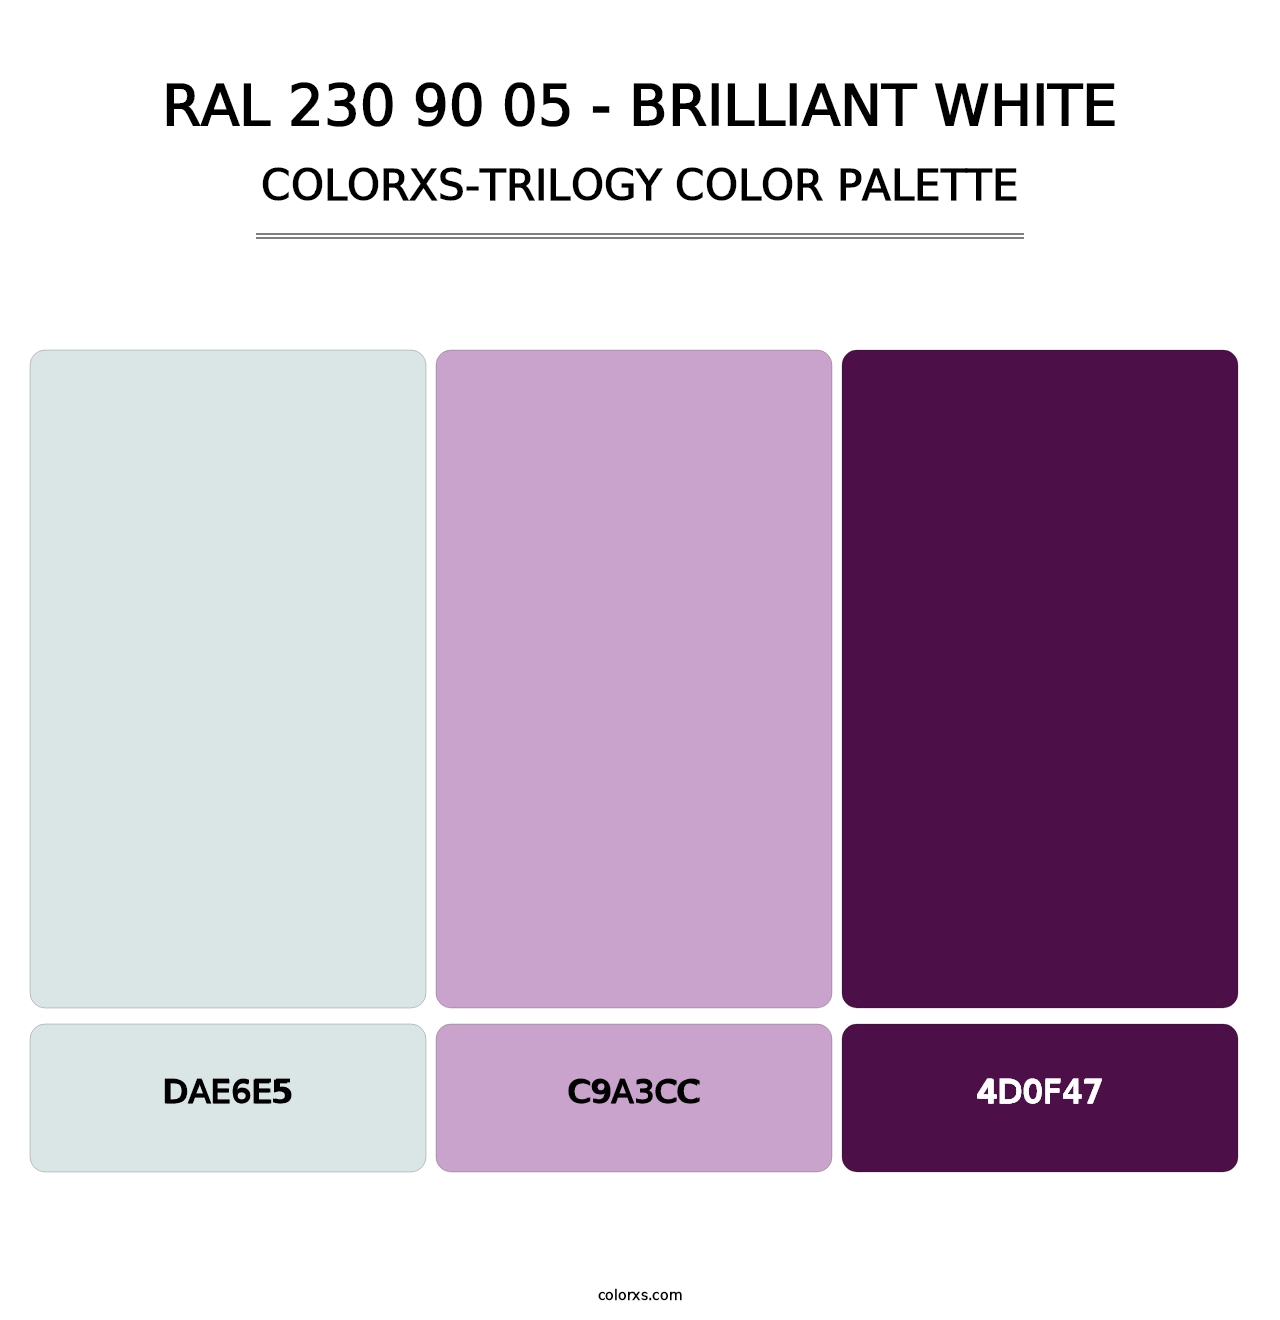 RAL 230 90 05 - Brilliant White - Colorxs Trilogy Palette